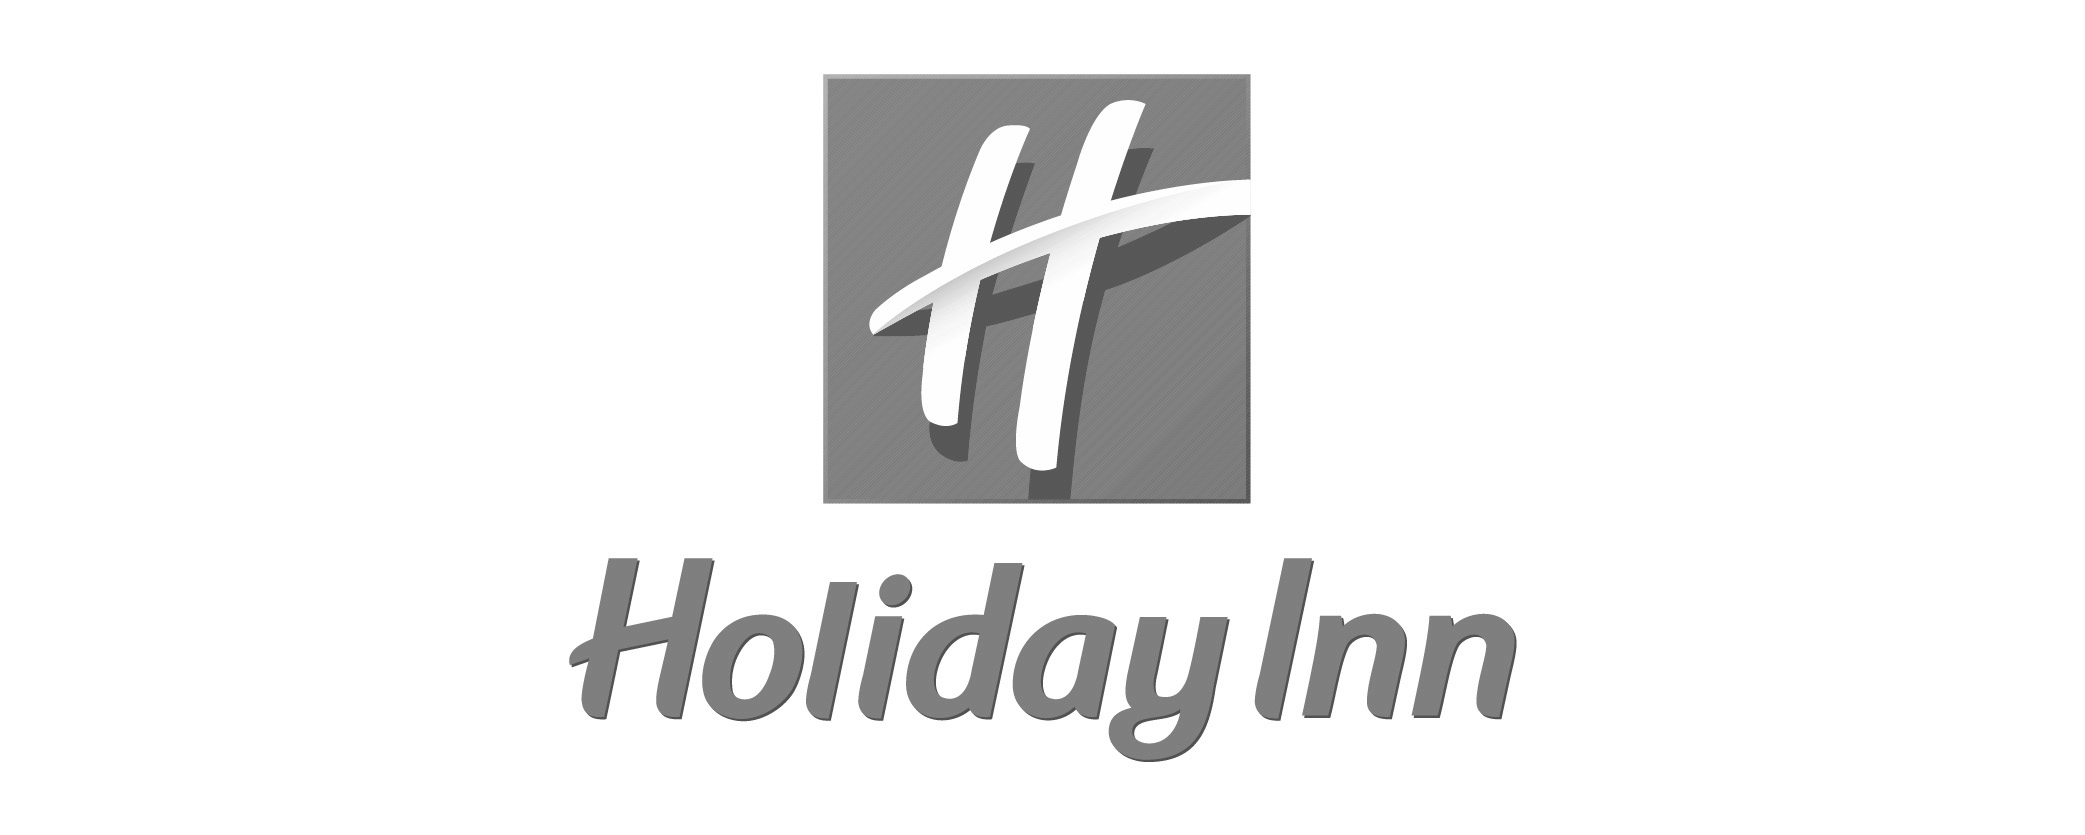 Holiday Inn, Client Logo,